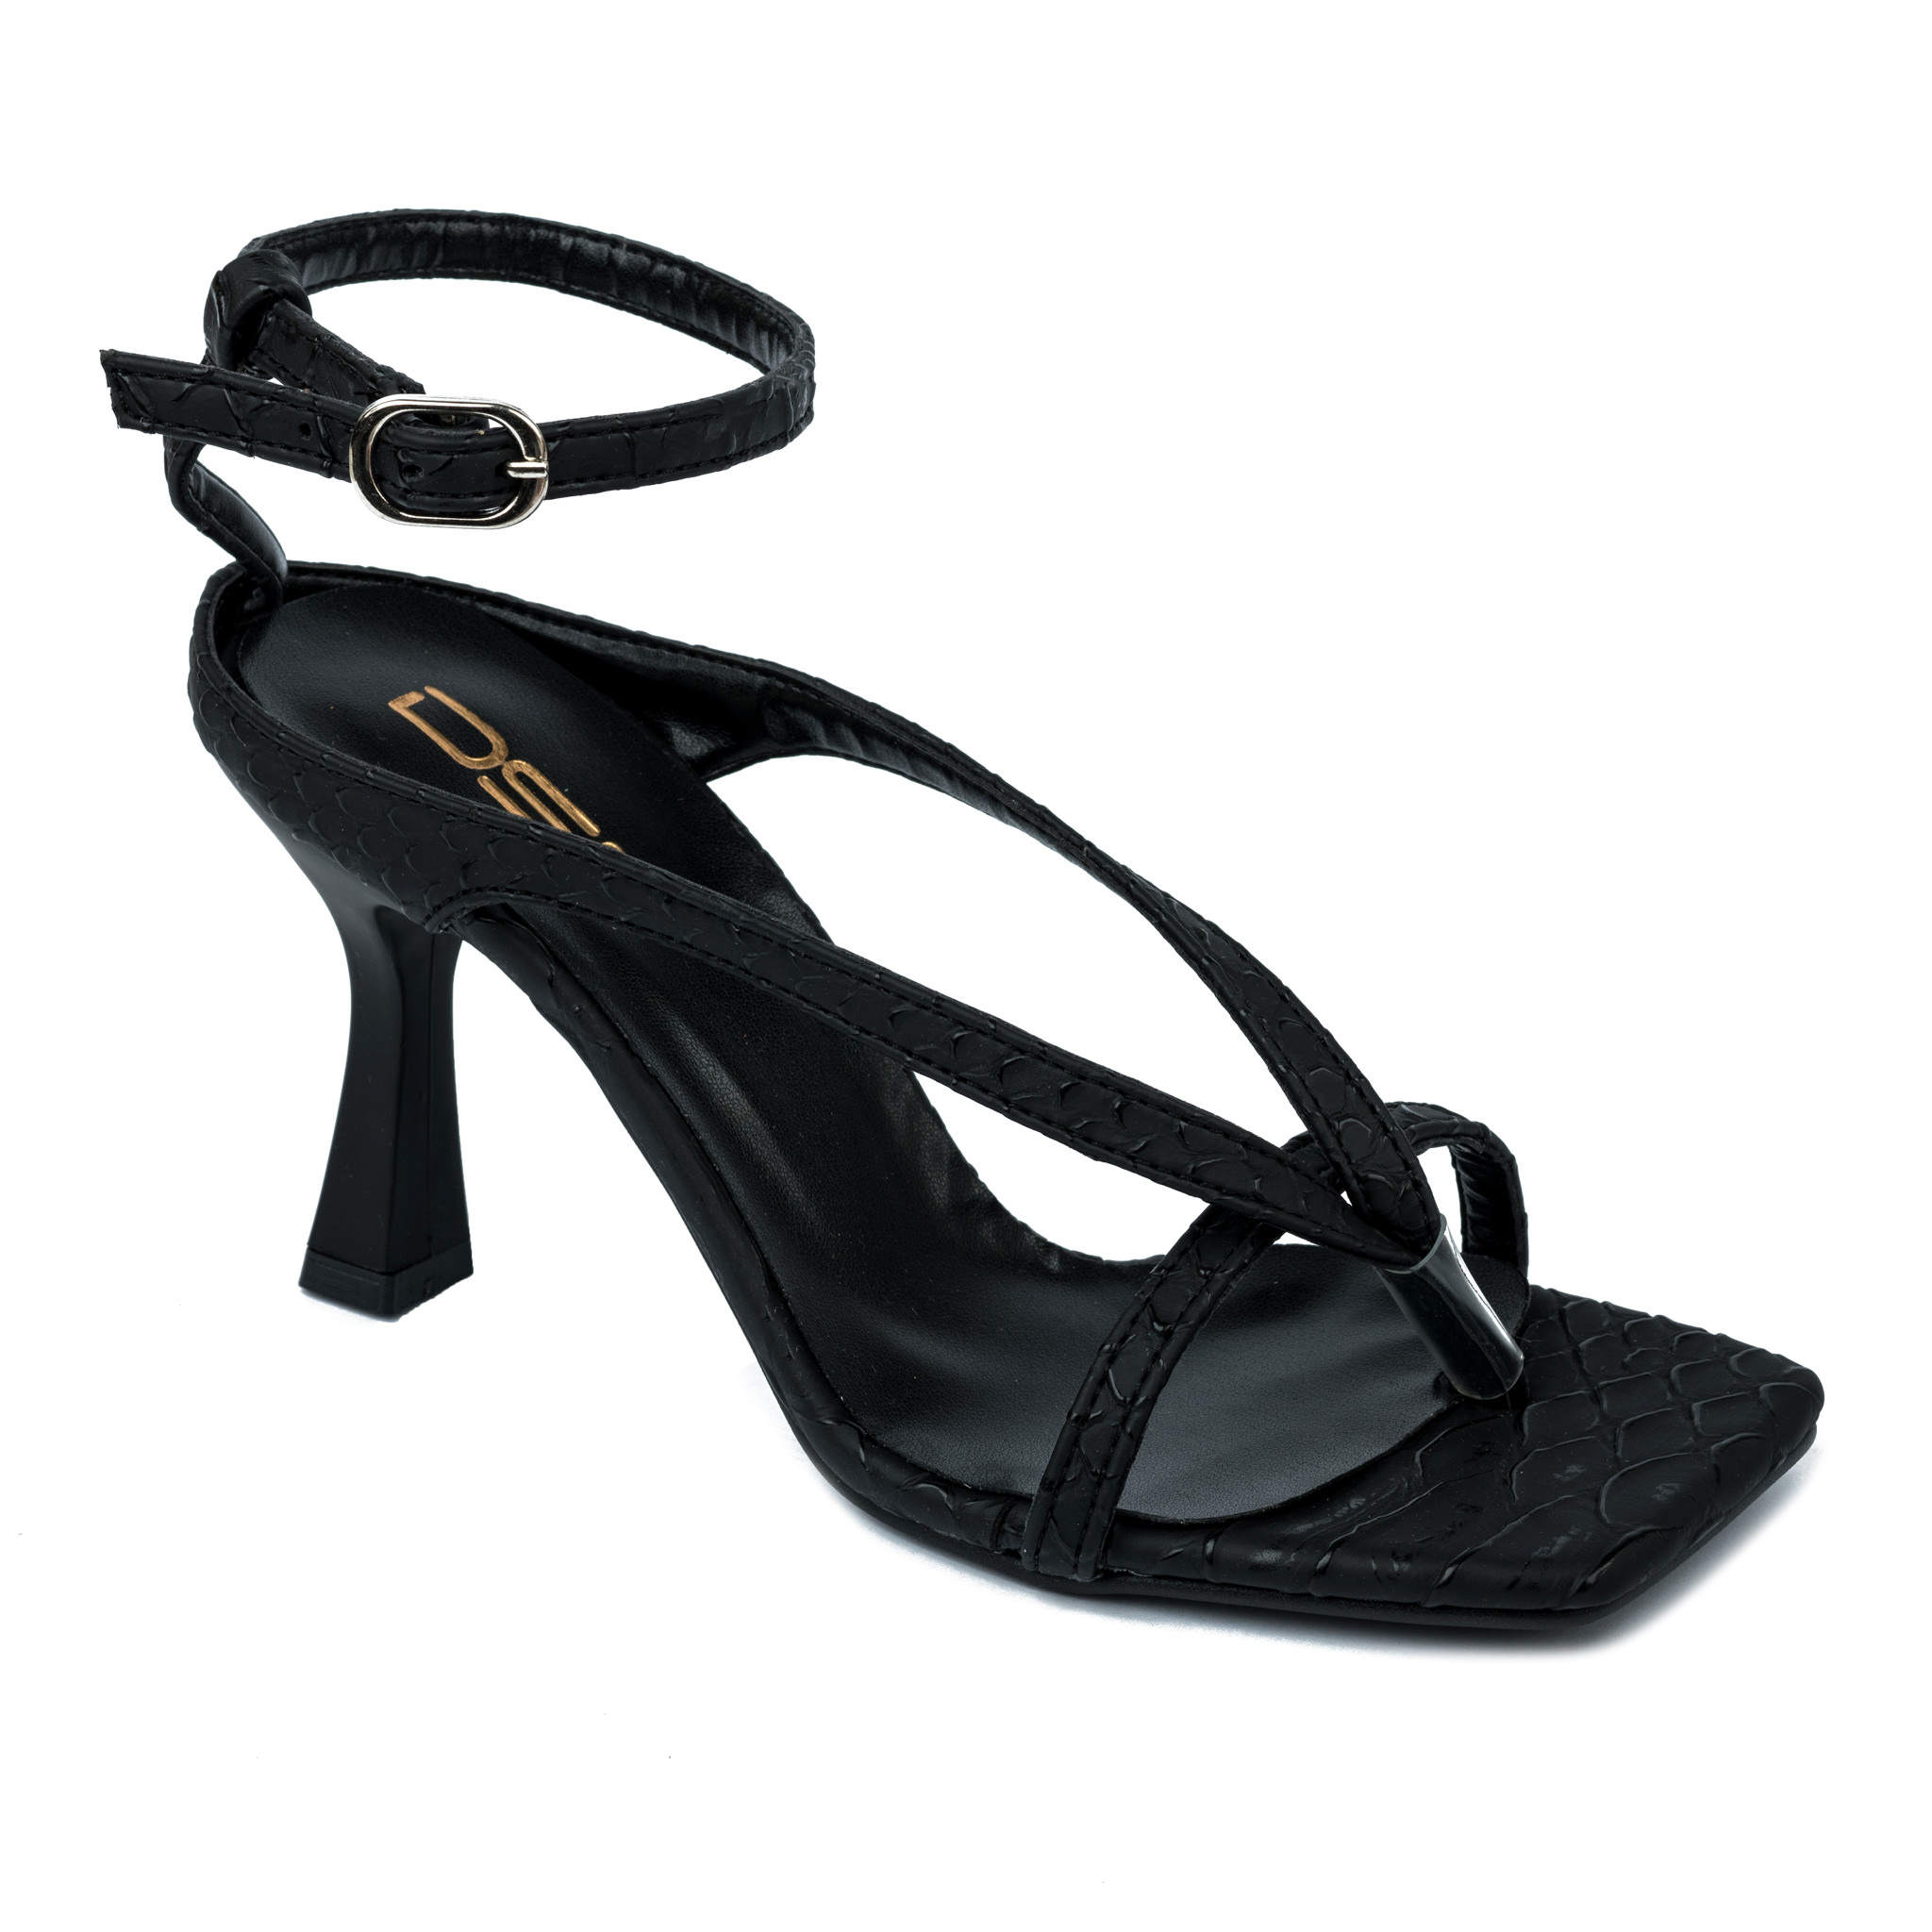 Women sandals A465 - BLACK